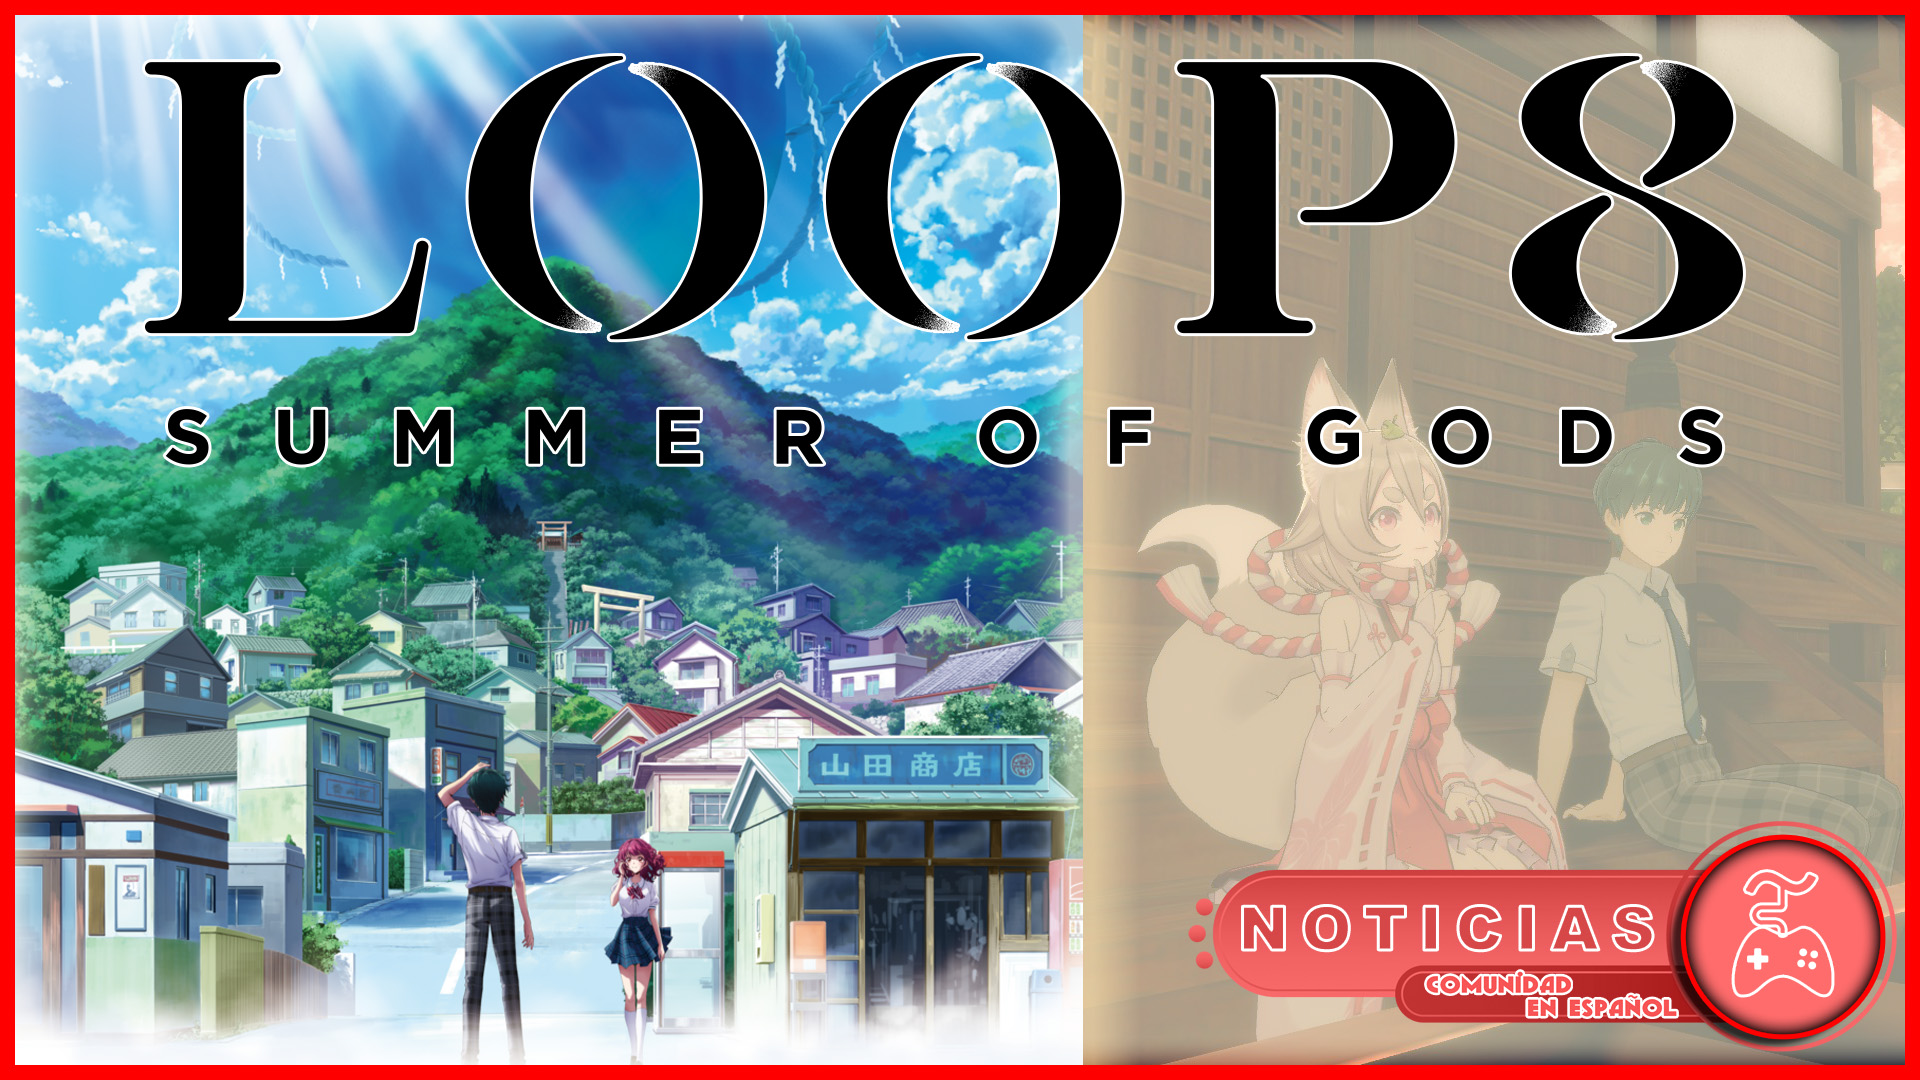 Loop8 Summer of Gods - Noticias